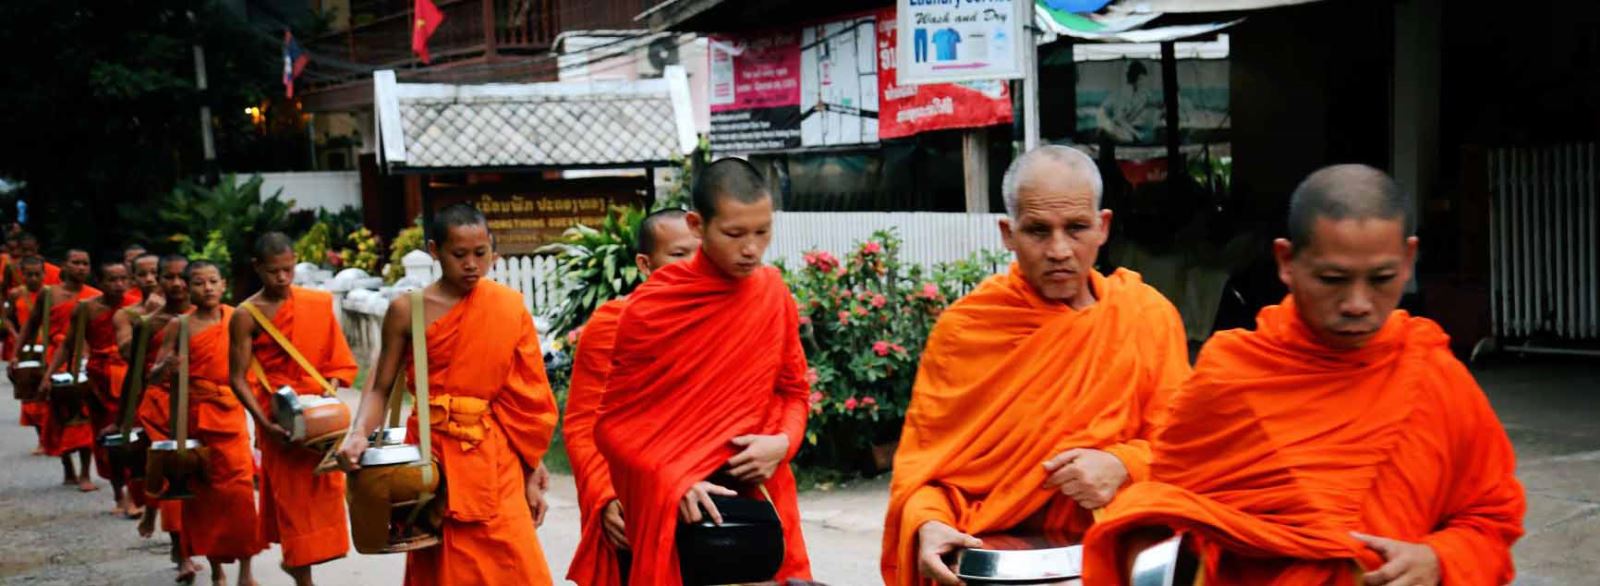  Tak Bat, the Morning Alms Ceremony in Luang Prabang